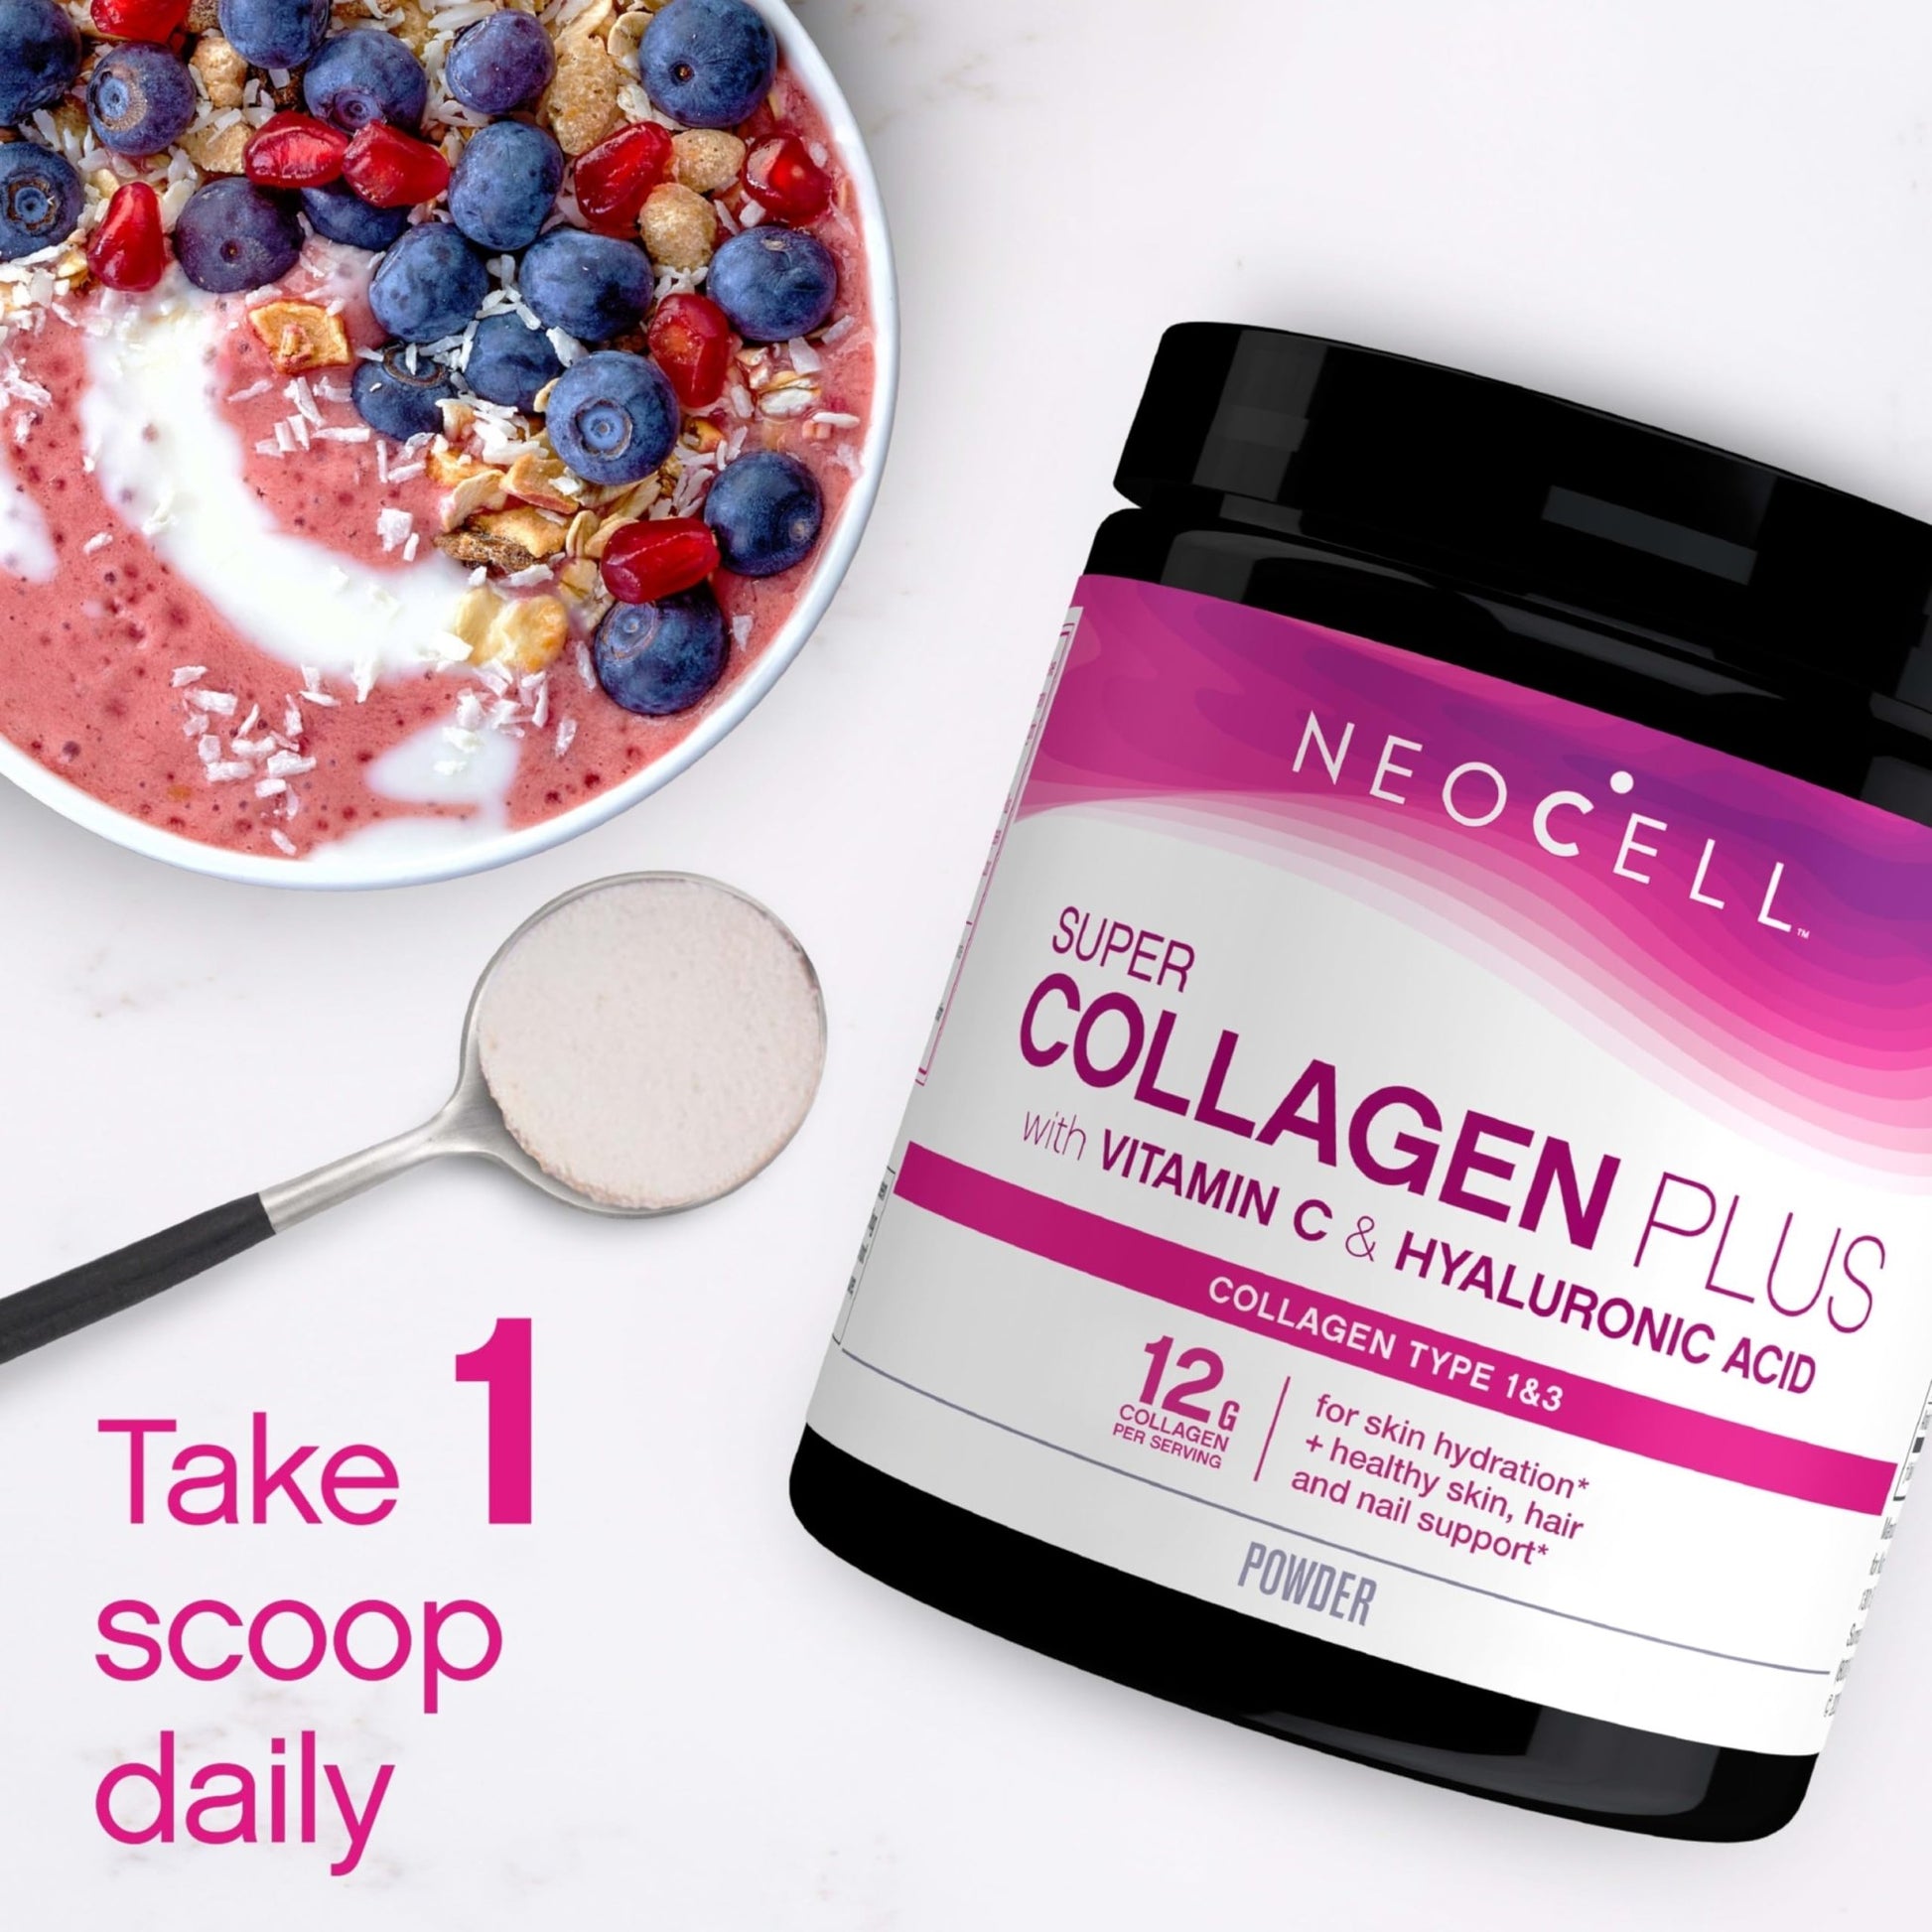 Neocell Super Collagen Plus Vitamin C & Hyaluronic Acid Powder 390g /13.7oz Exp 12/2025 - Ome's Beauty Mart